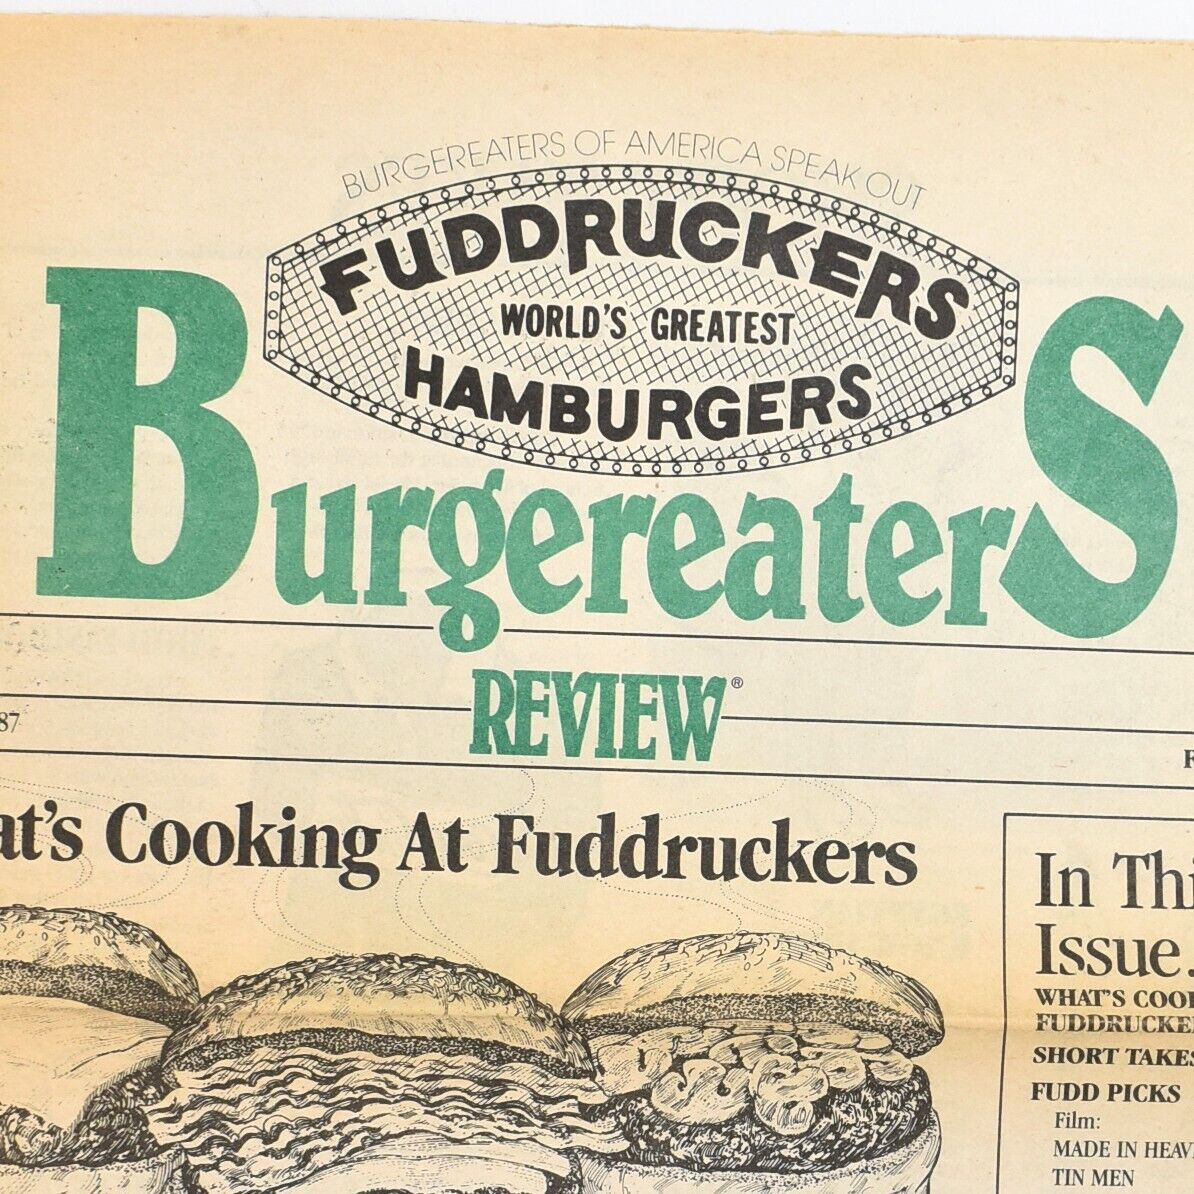 1987 Fuddruckers Hamburgers Restaurant  Burgereaters Review Newspaper